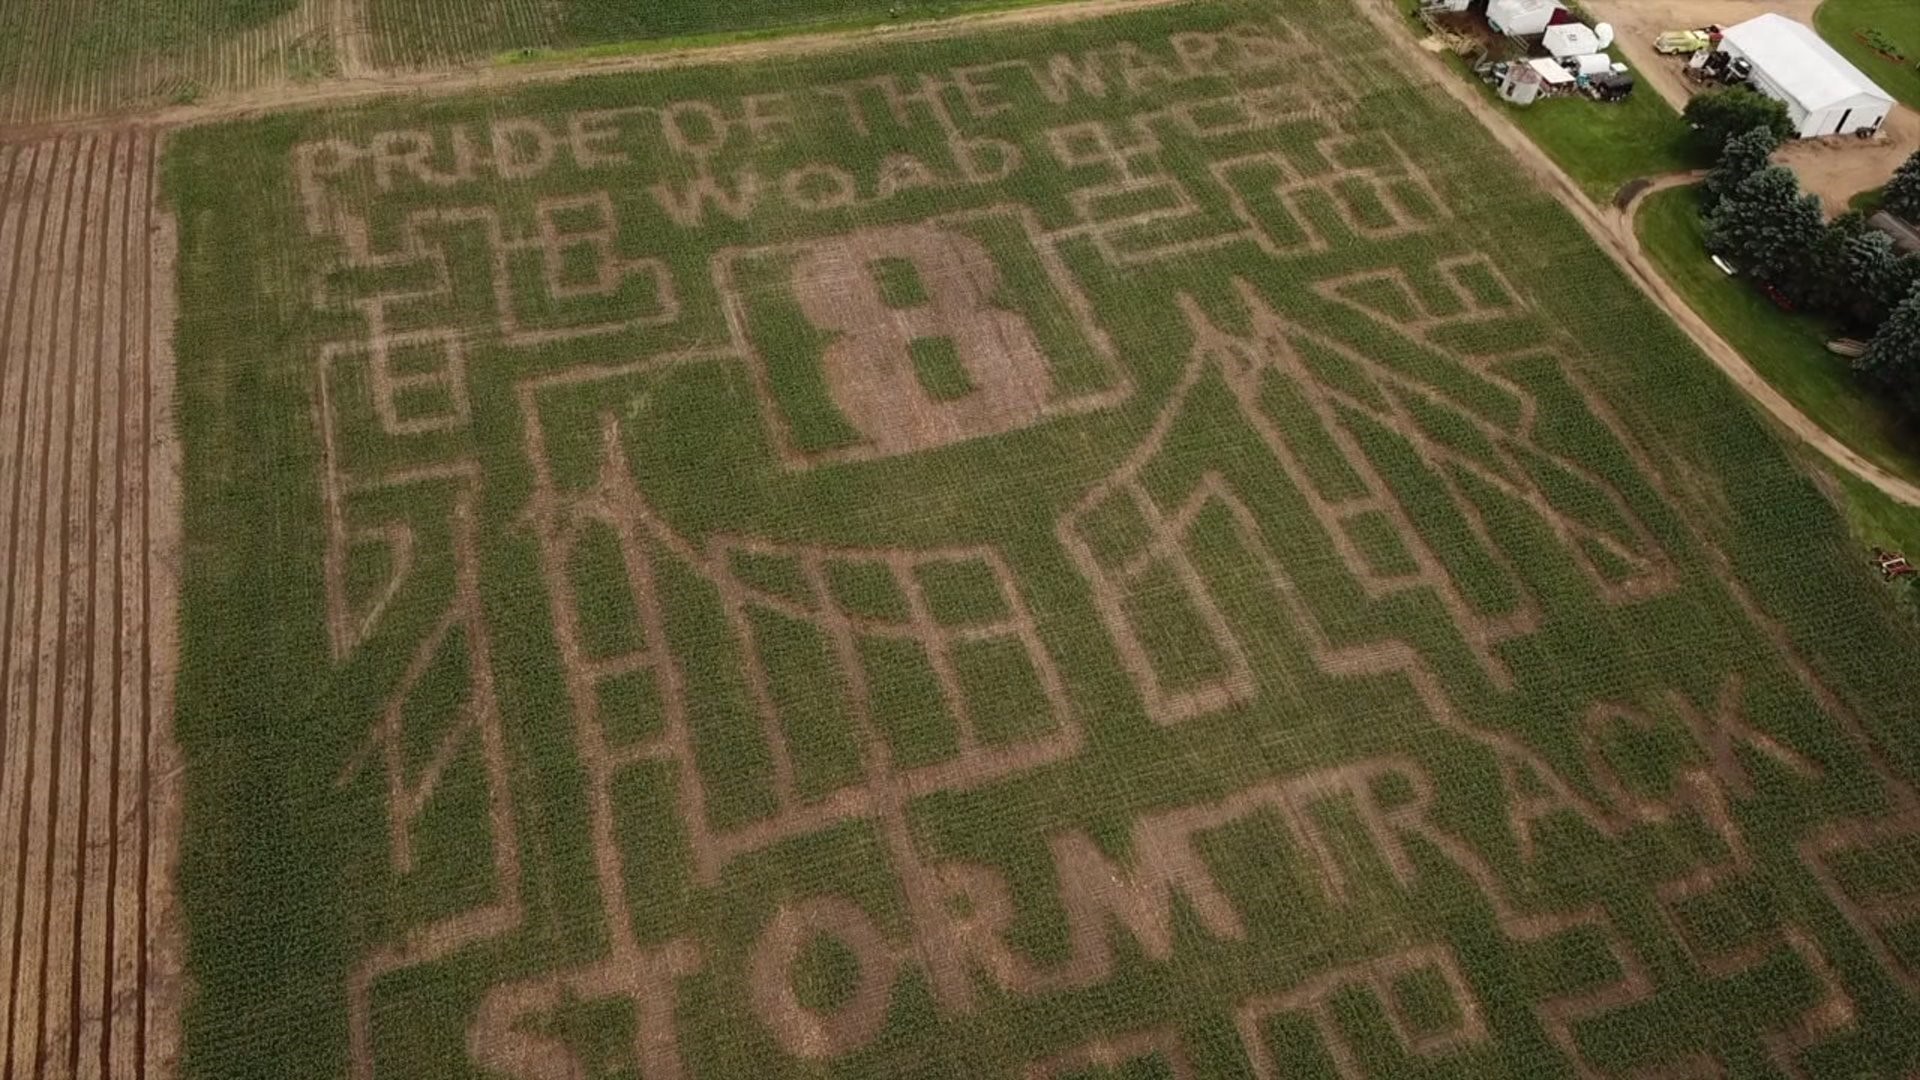 Pride of the Wapsi corn maze started to take shape